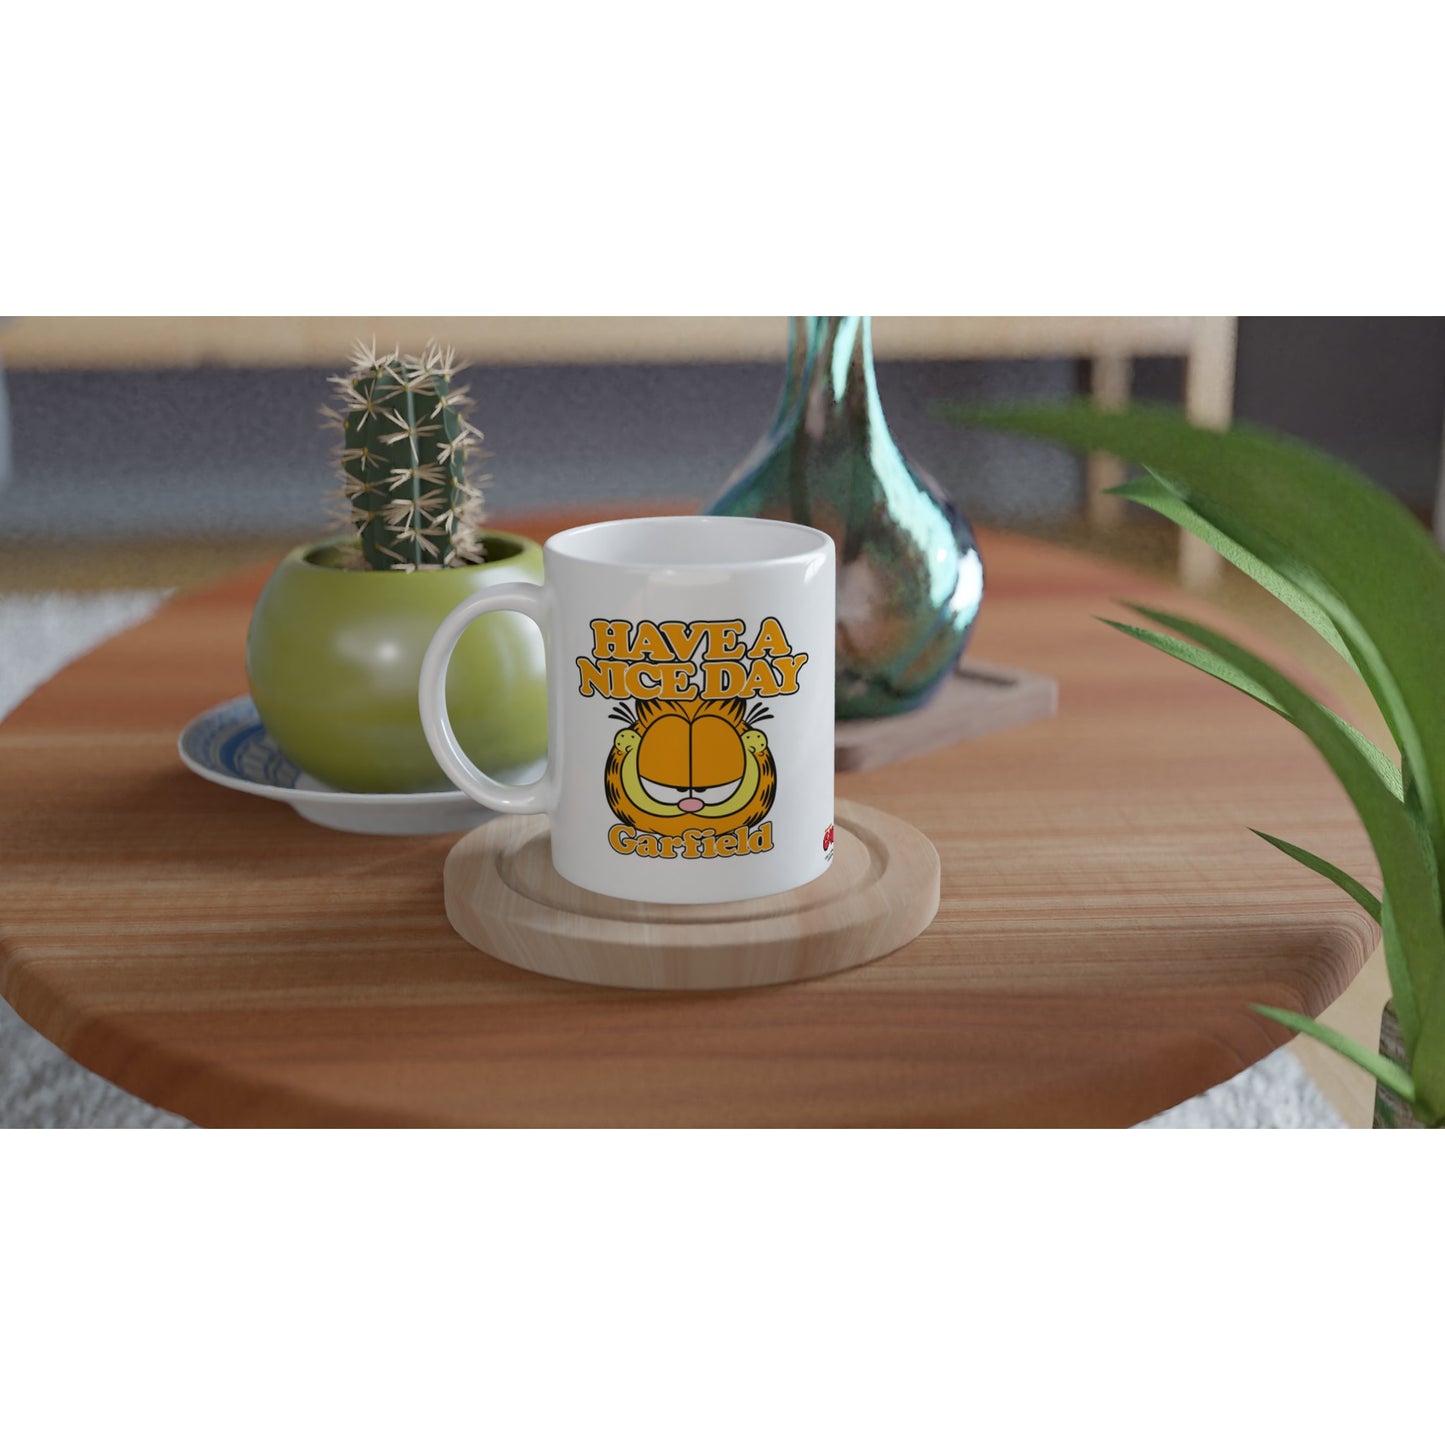 Official Garfield Mug - Have A Nice Day - 330ml White Mug